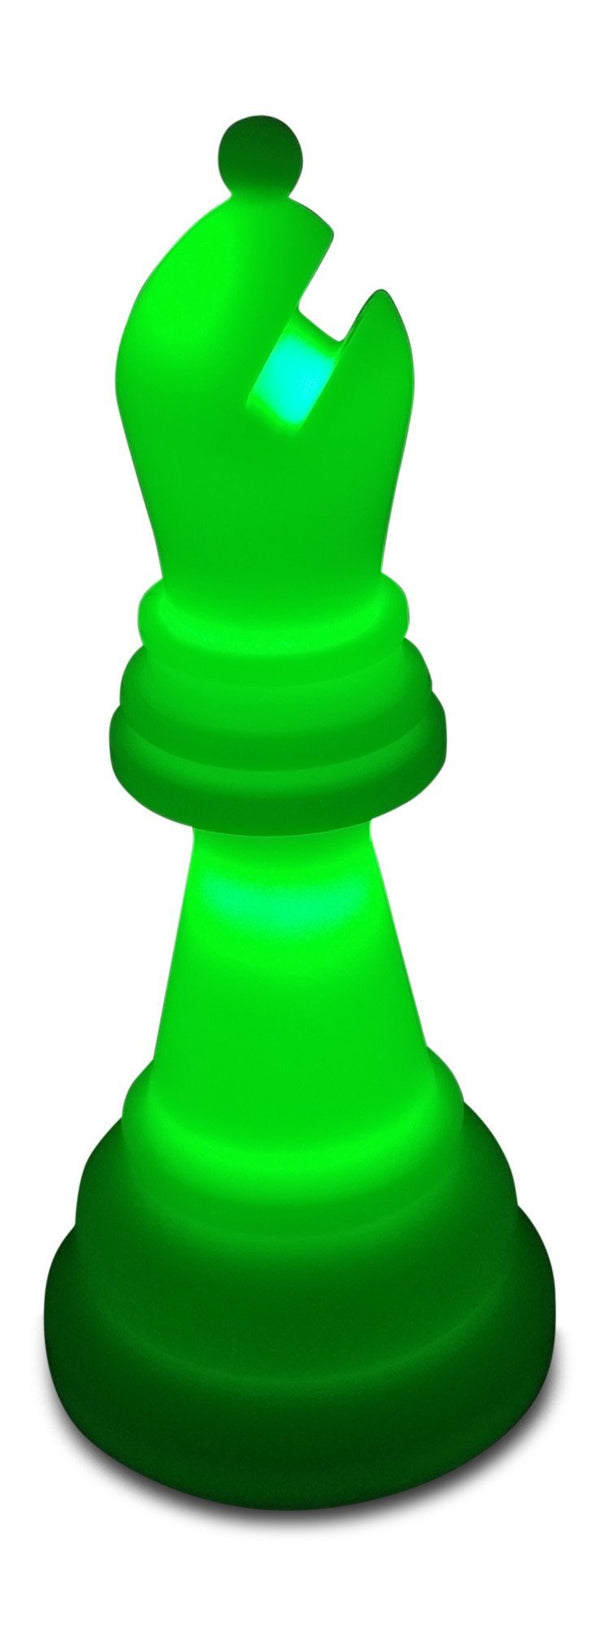 MegaChess 34 Inch Perfect Bishop Light-Up Giant Chess Piece - Green |  | MegaChess.com